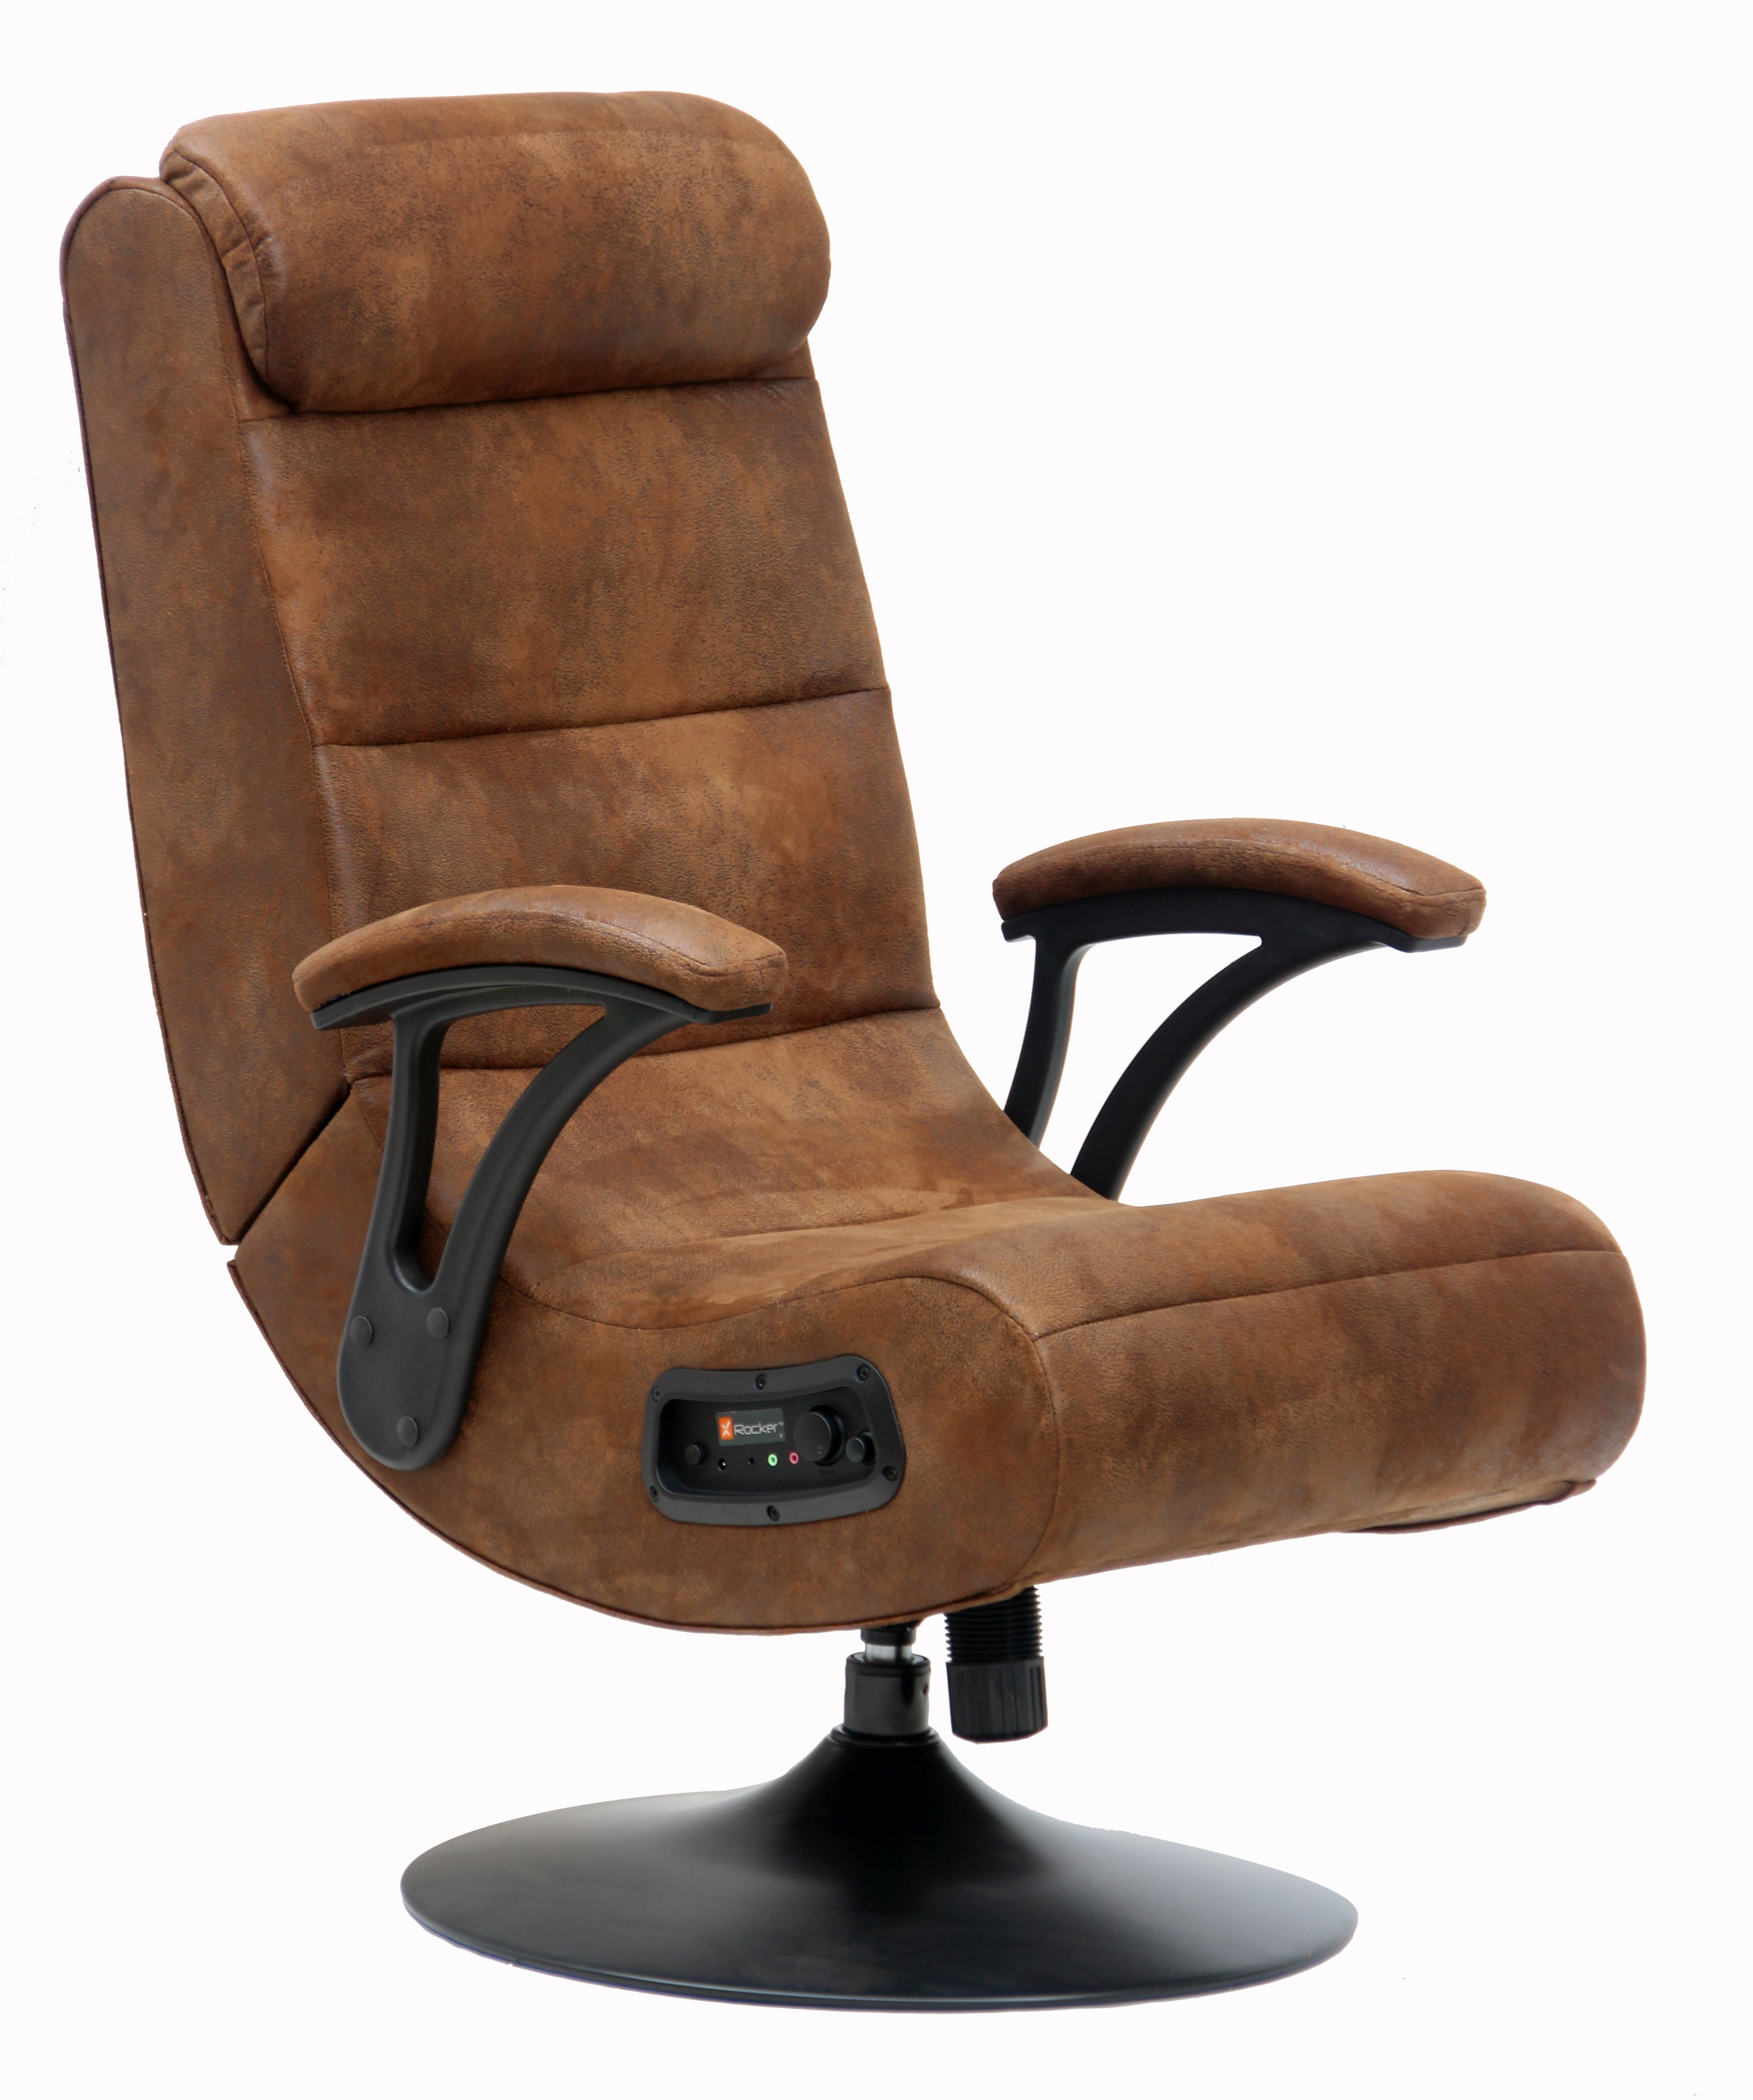 X Rocker 2 1 Bluetooth Pedestal Gaming Chair In Distressed Brown